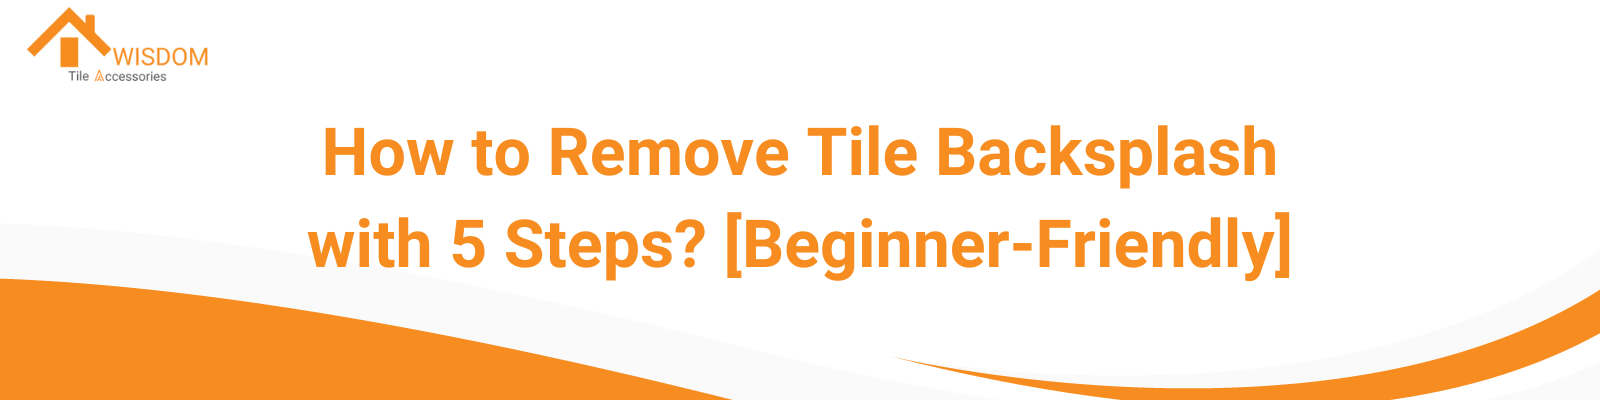 how to remove tile backsplash with 5 steps [beginner-friendly]]